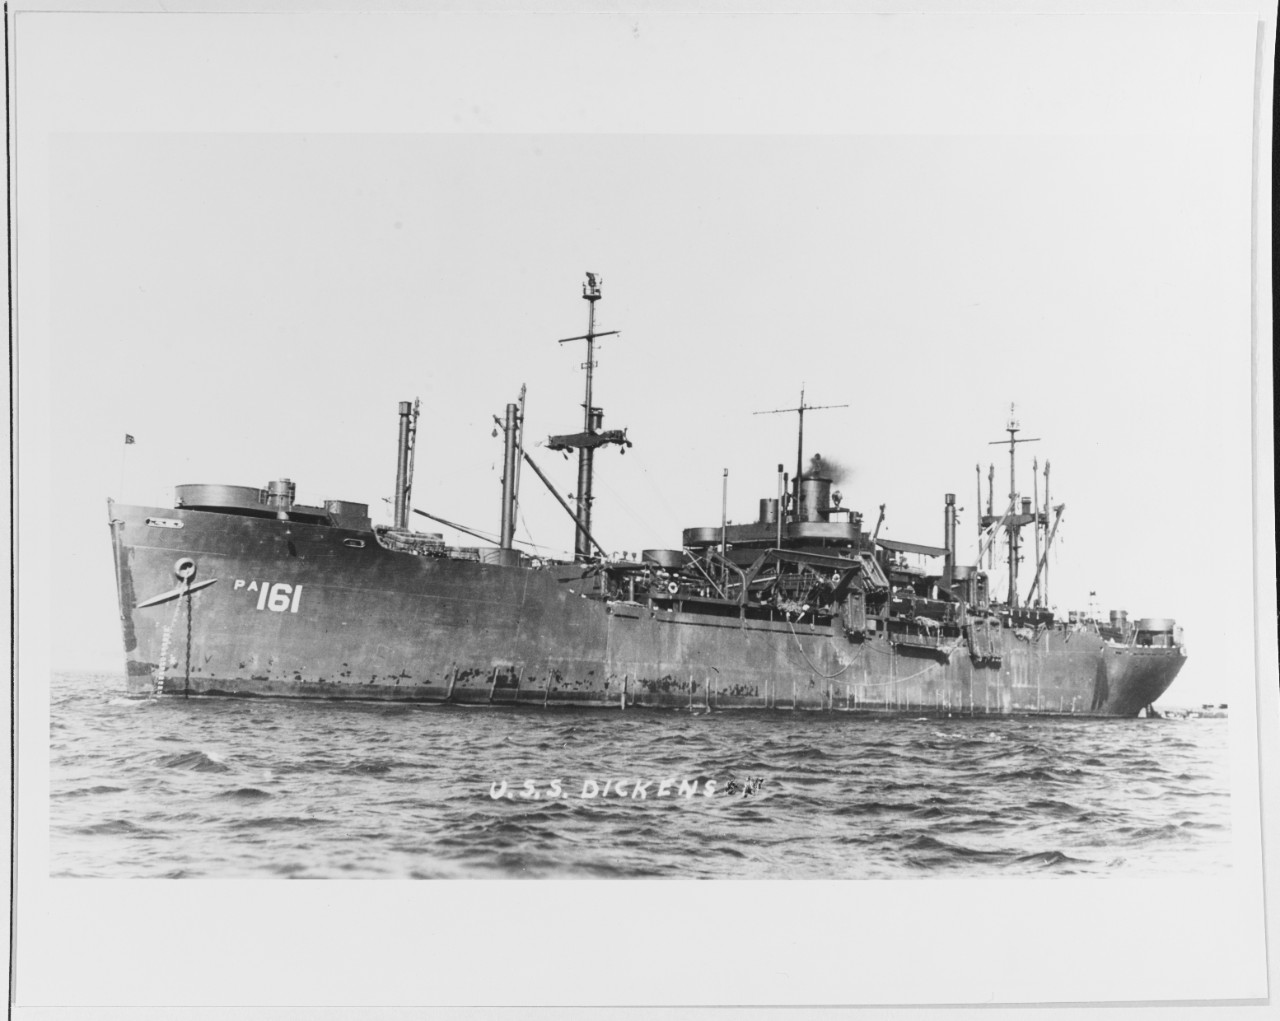 USS DICKENS (APA-161)